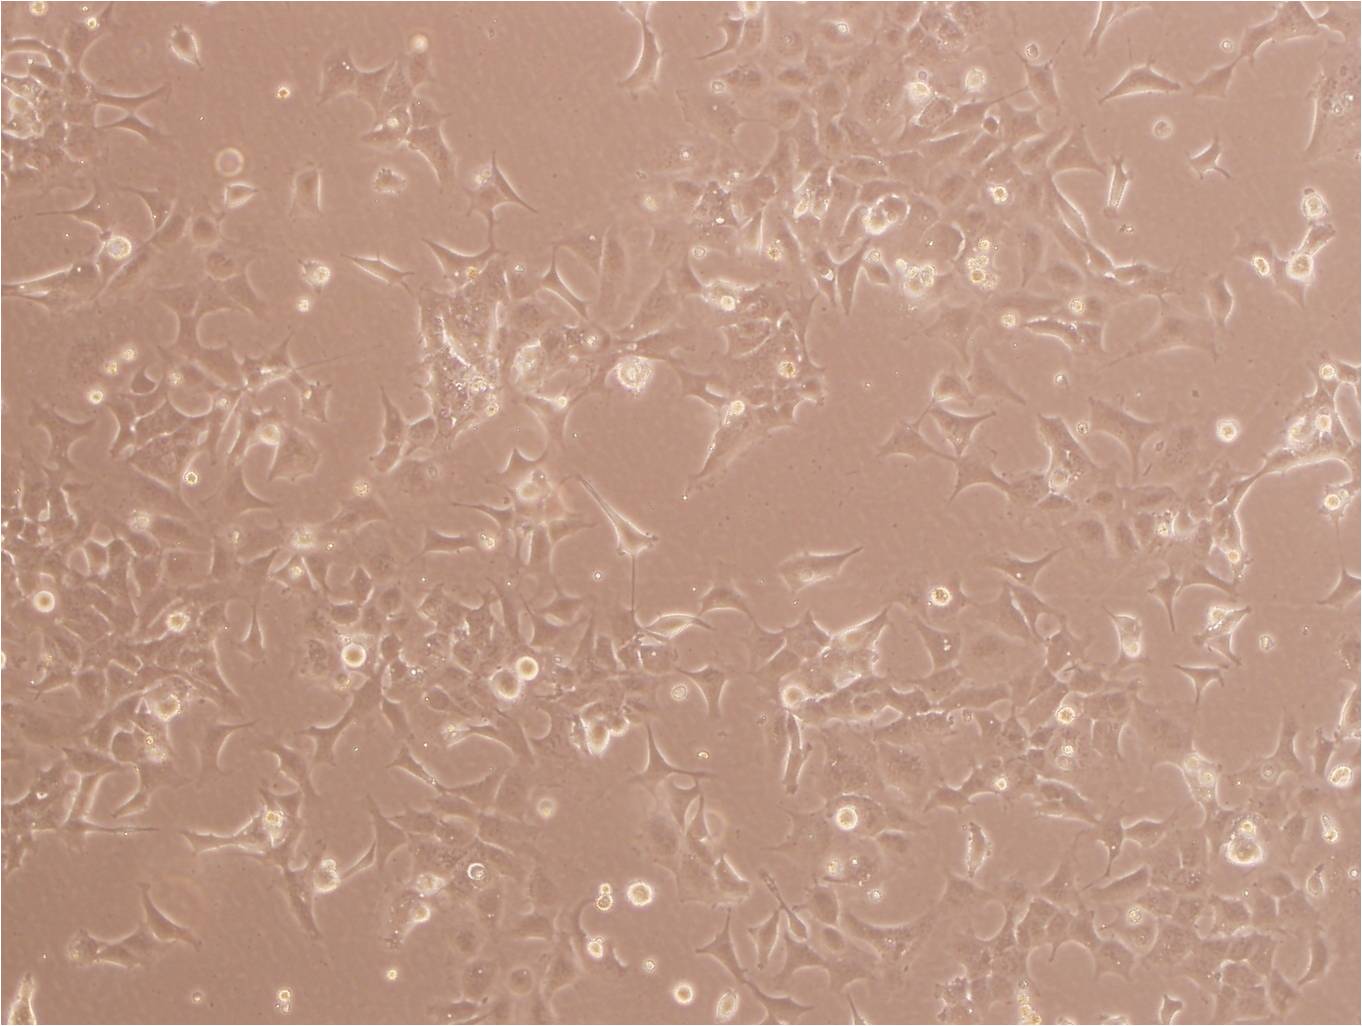 CBRH-7919 Adherent大鼠肝癌细胞系